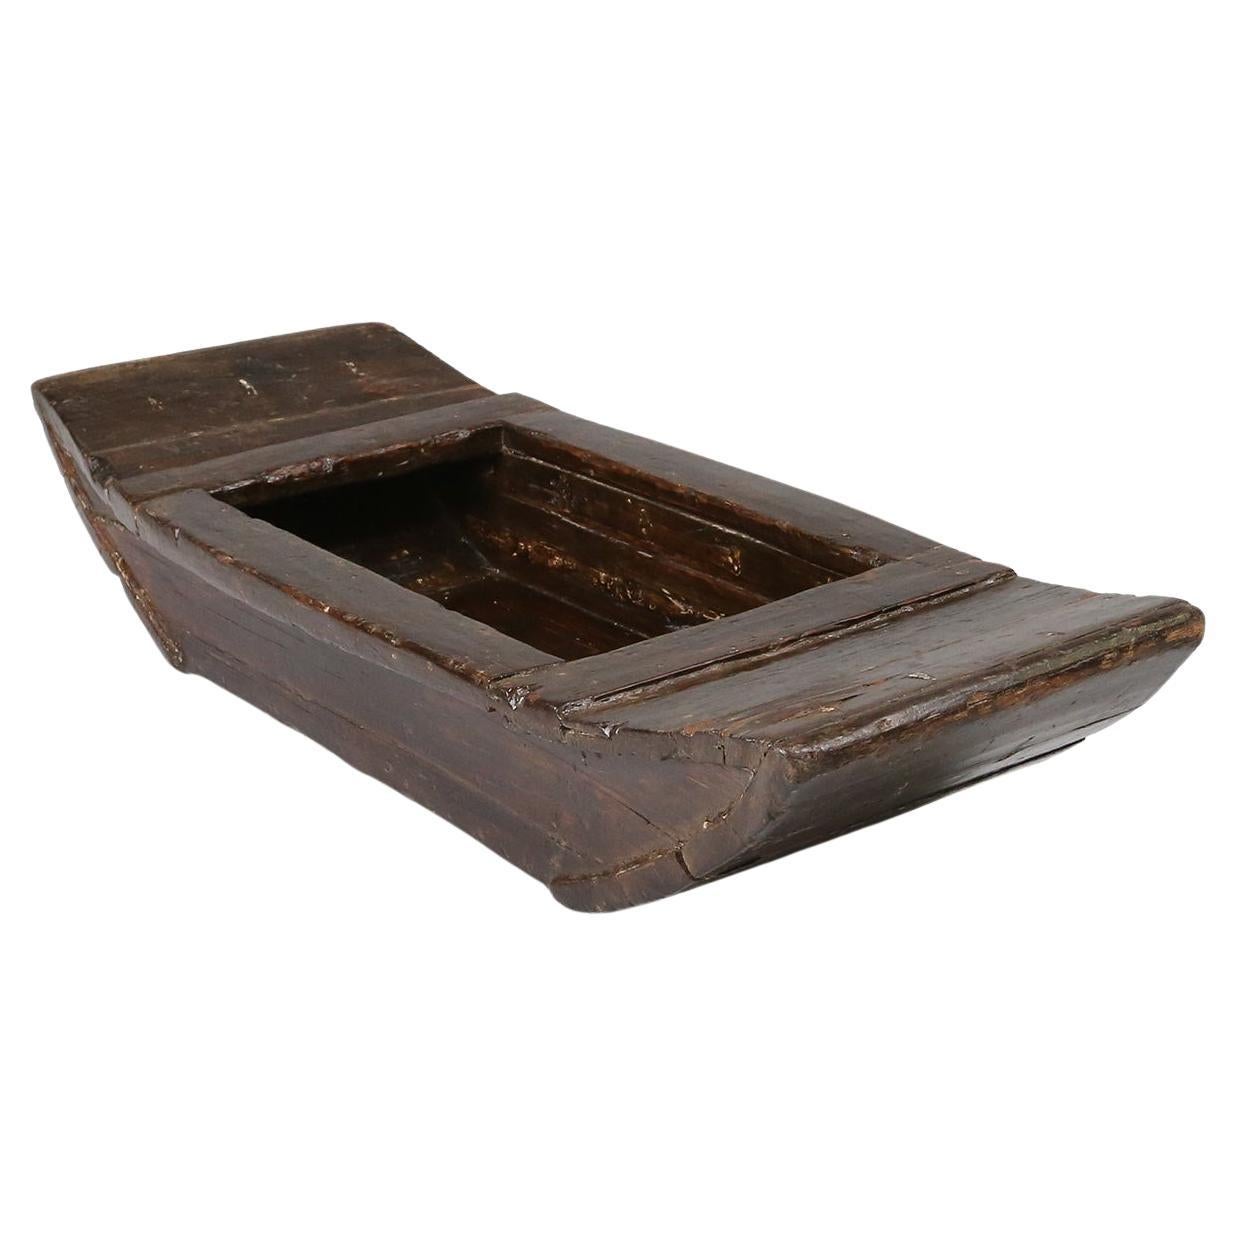 Antique handmade wooden trough or bowl Wabi Sabi, 19th Century